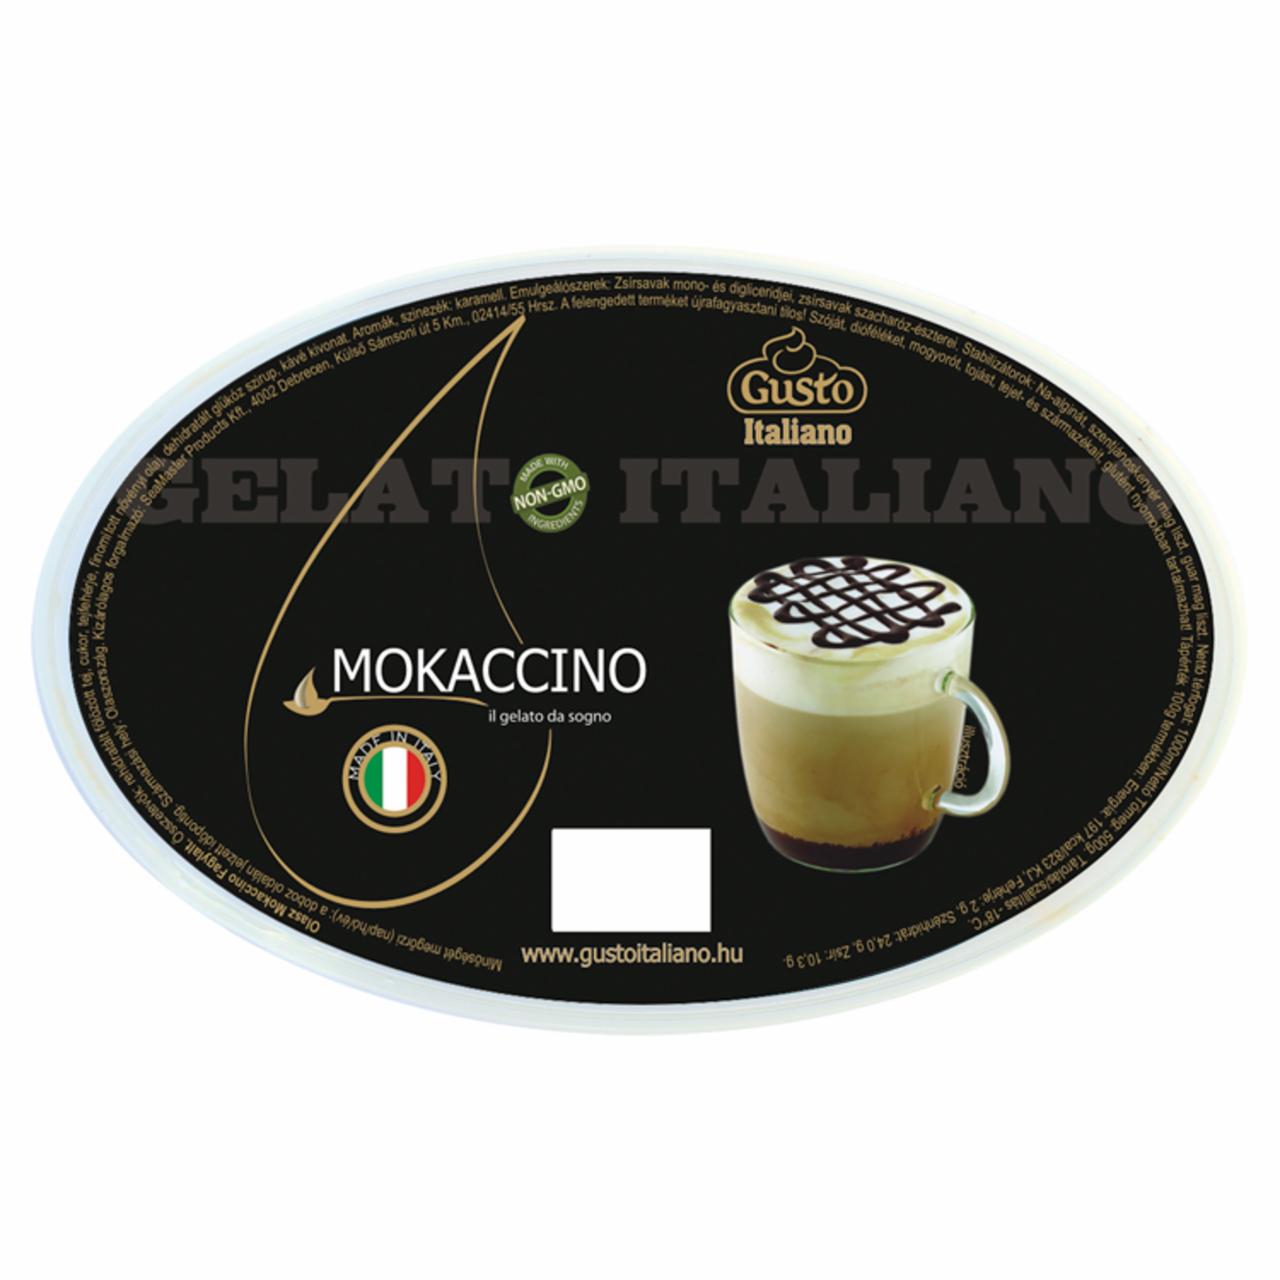 Képek - Gusto Italiano olasz mokaccino fagylalt 1000 ml